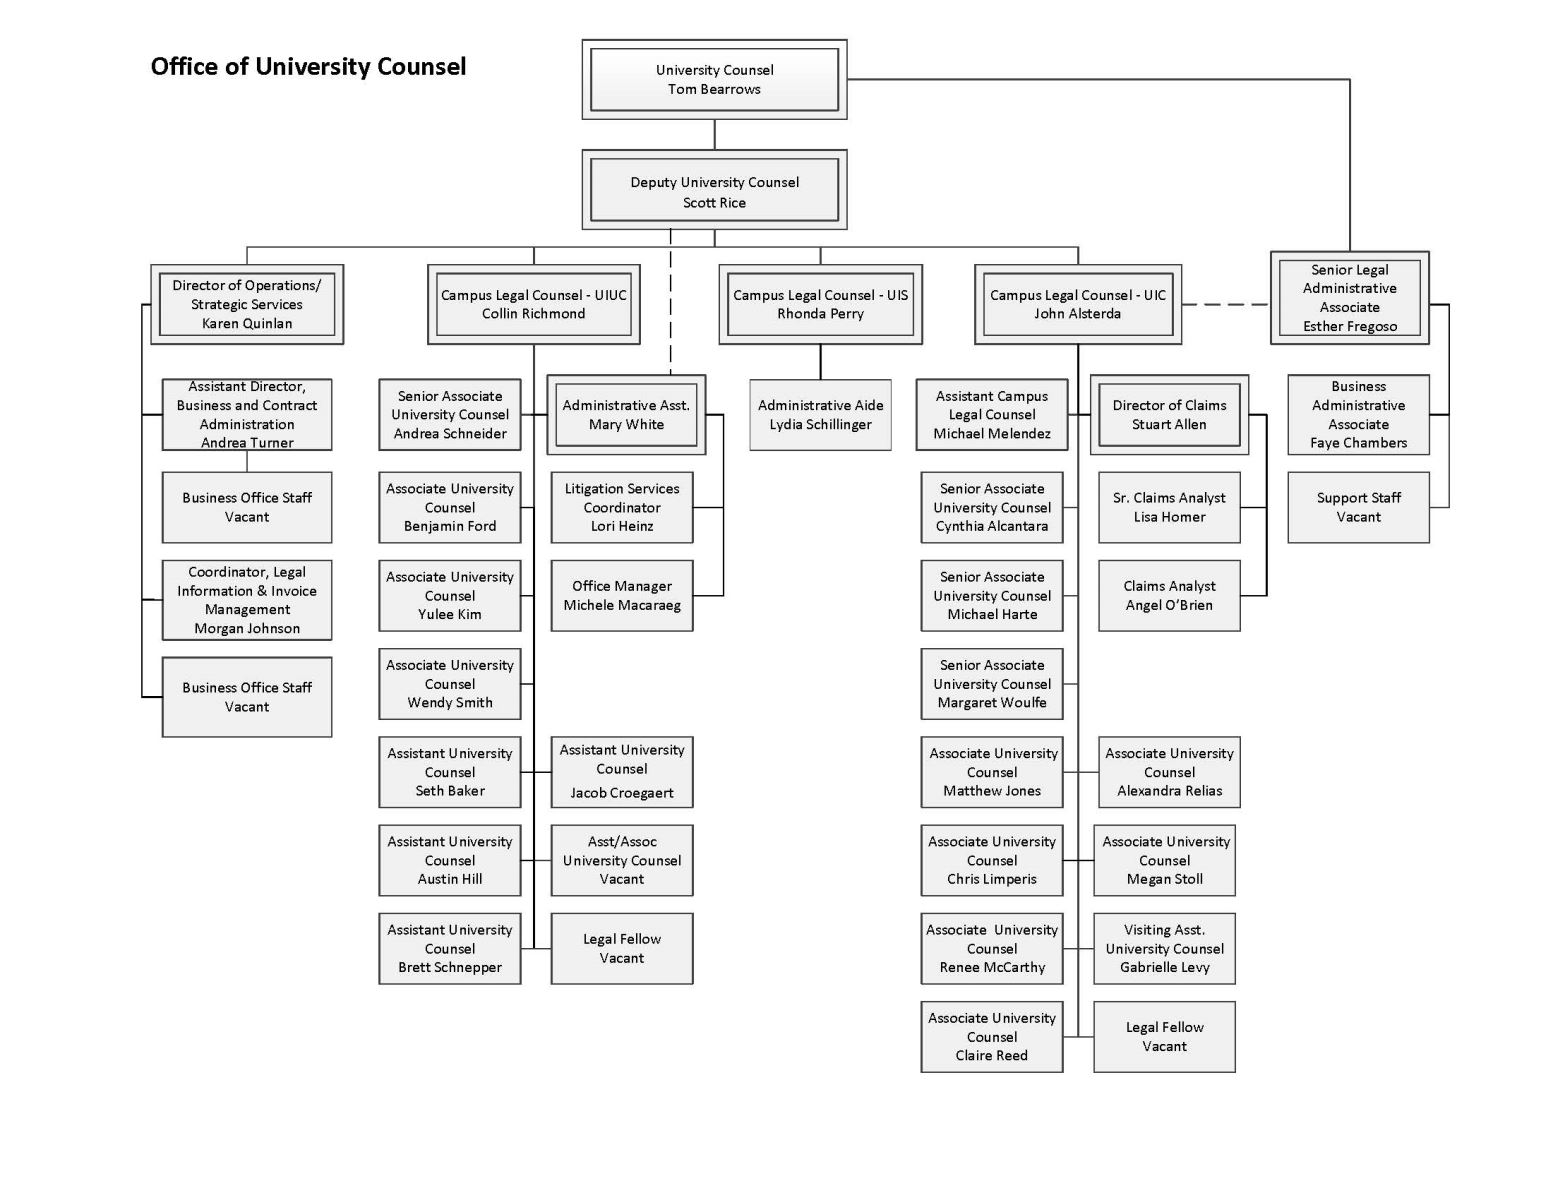 Organization Chart - LEGAL